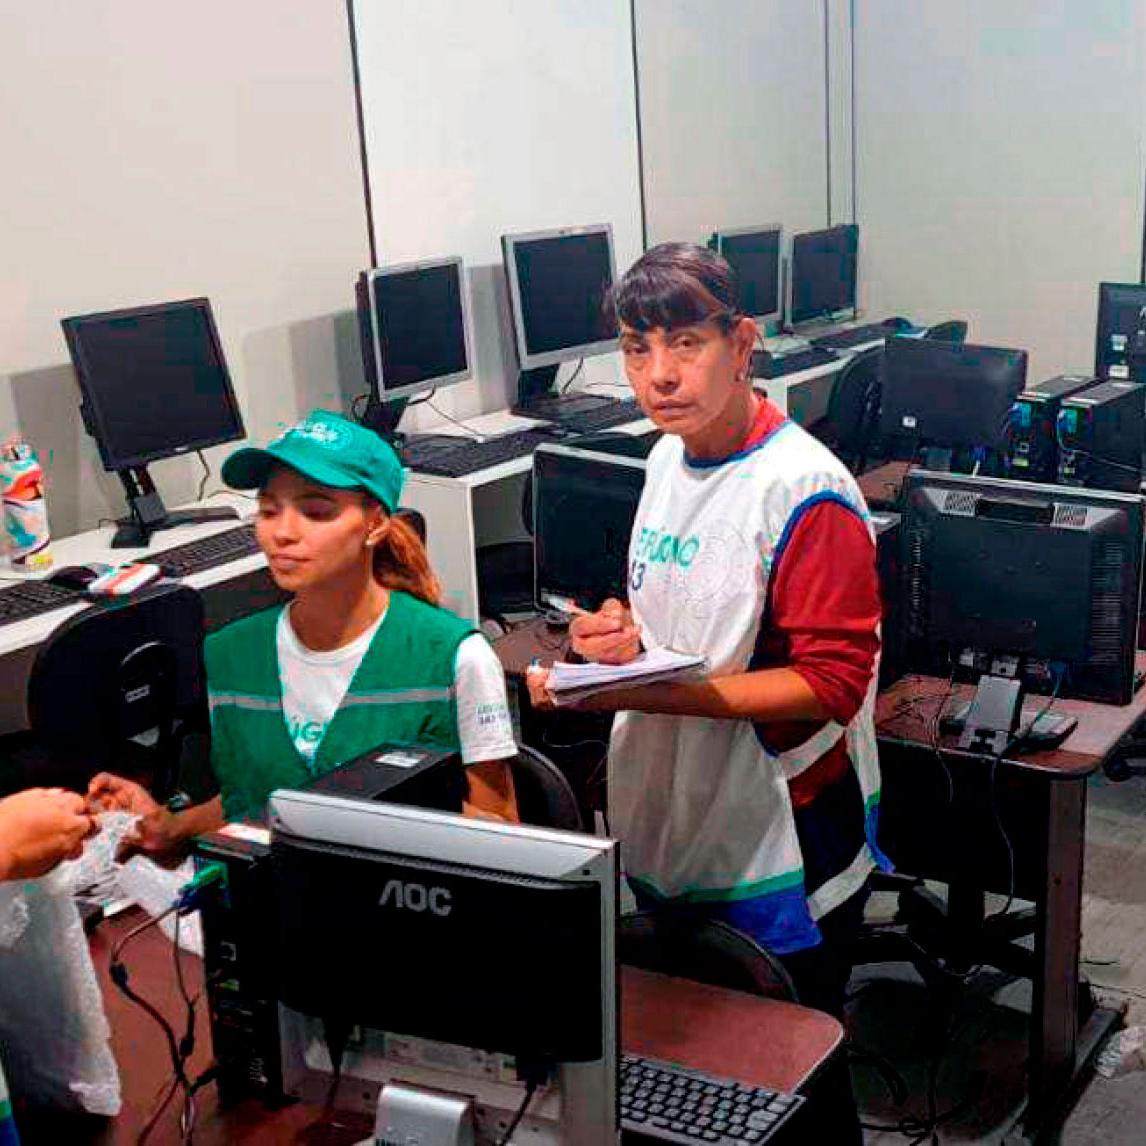 Suprisul doa 10 computadores para o a ONG Refúgio 343